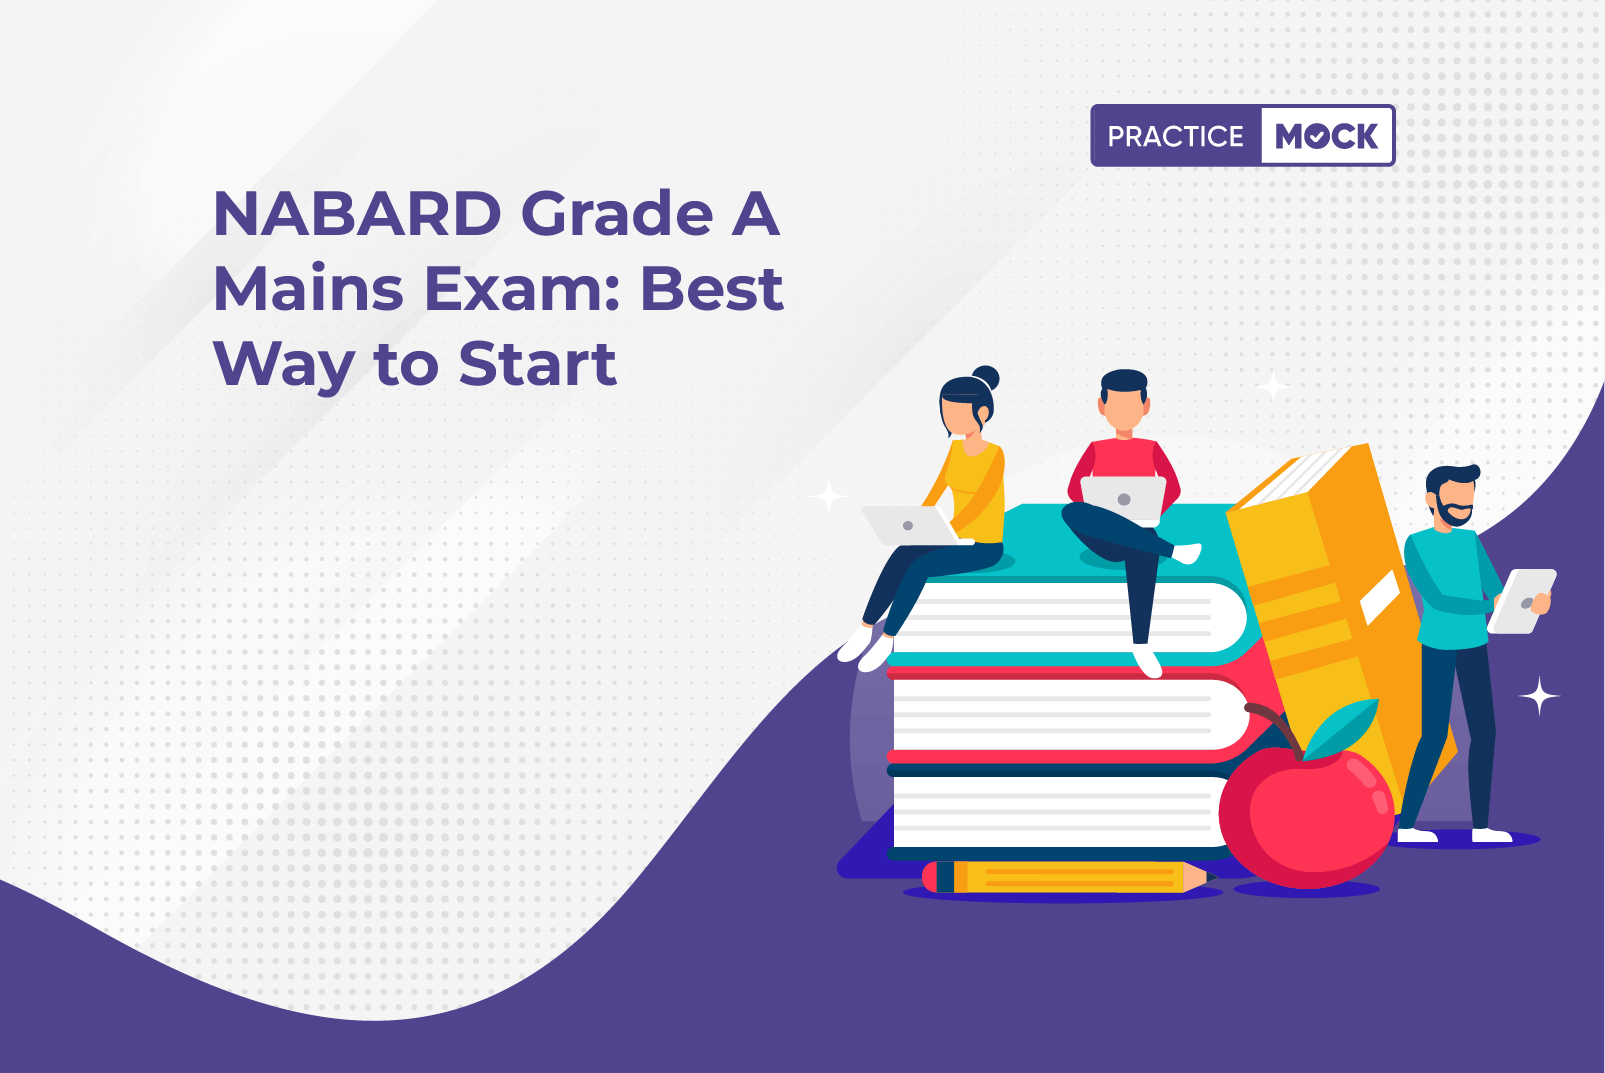 NABARD Grade A Mains Exam Best Way to Start